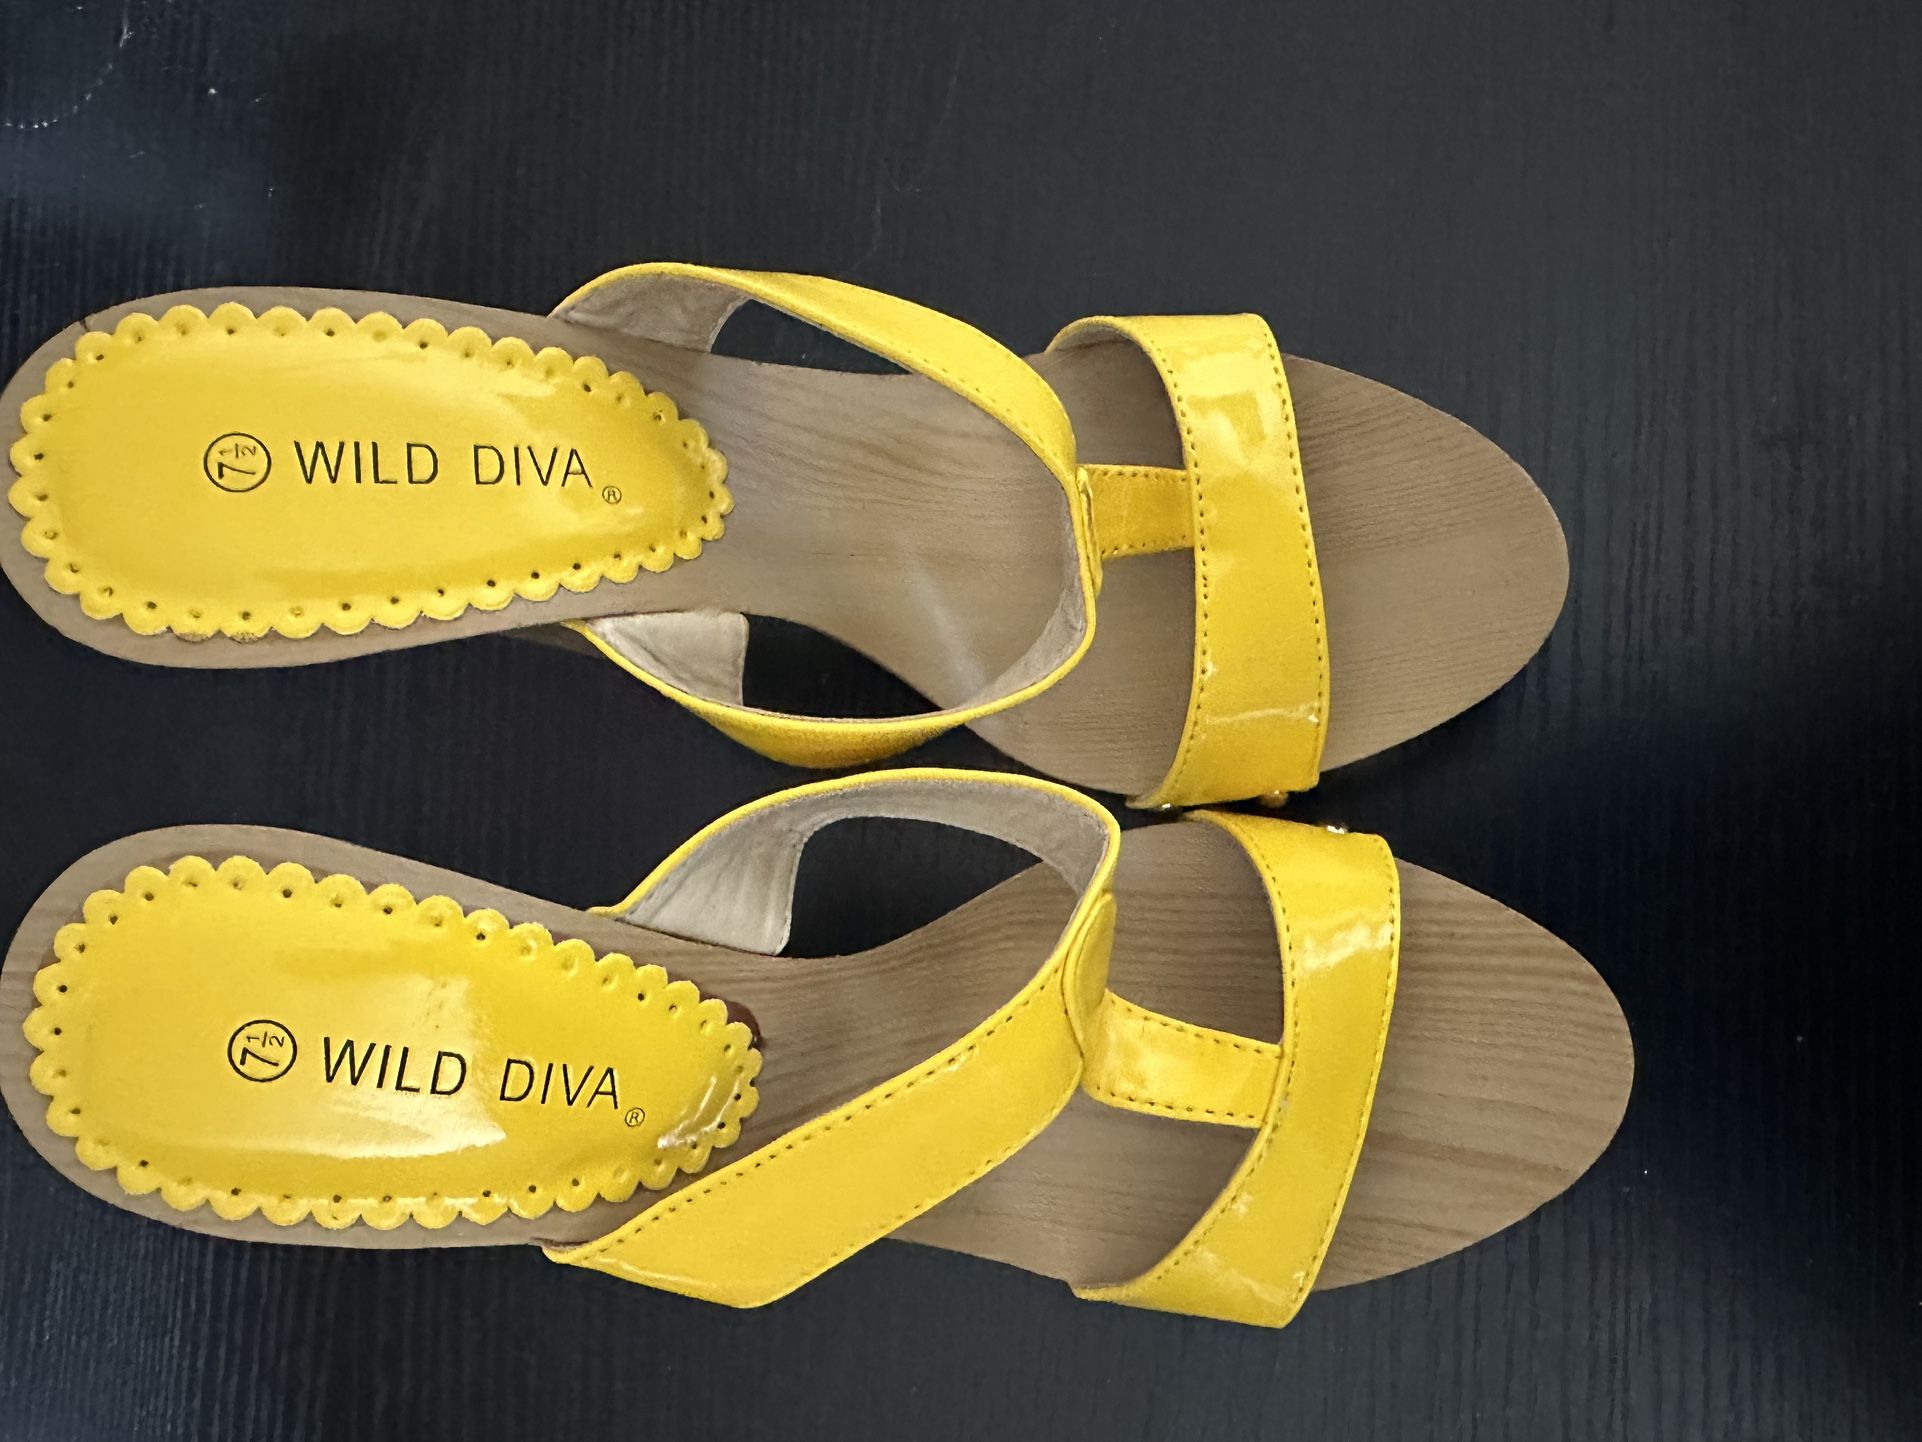 Wild Diva high heel size 7 1/2.